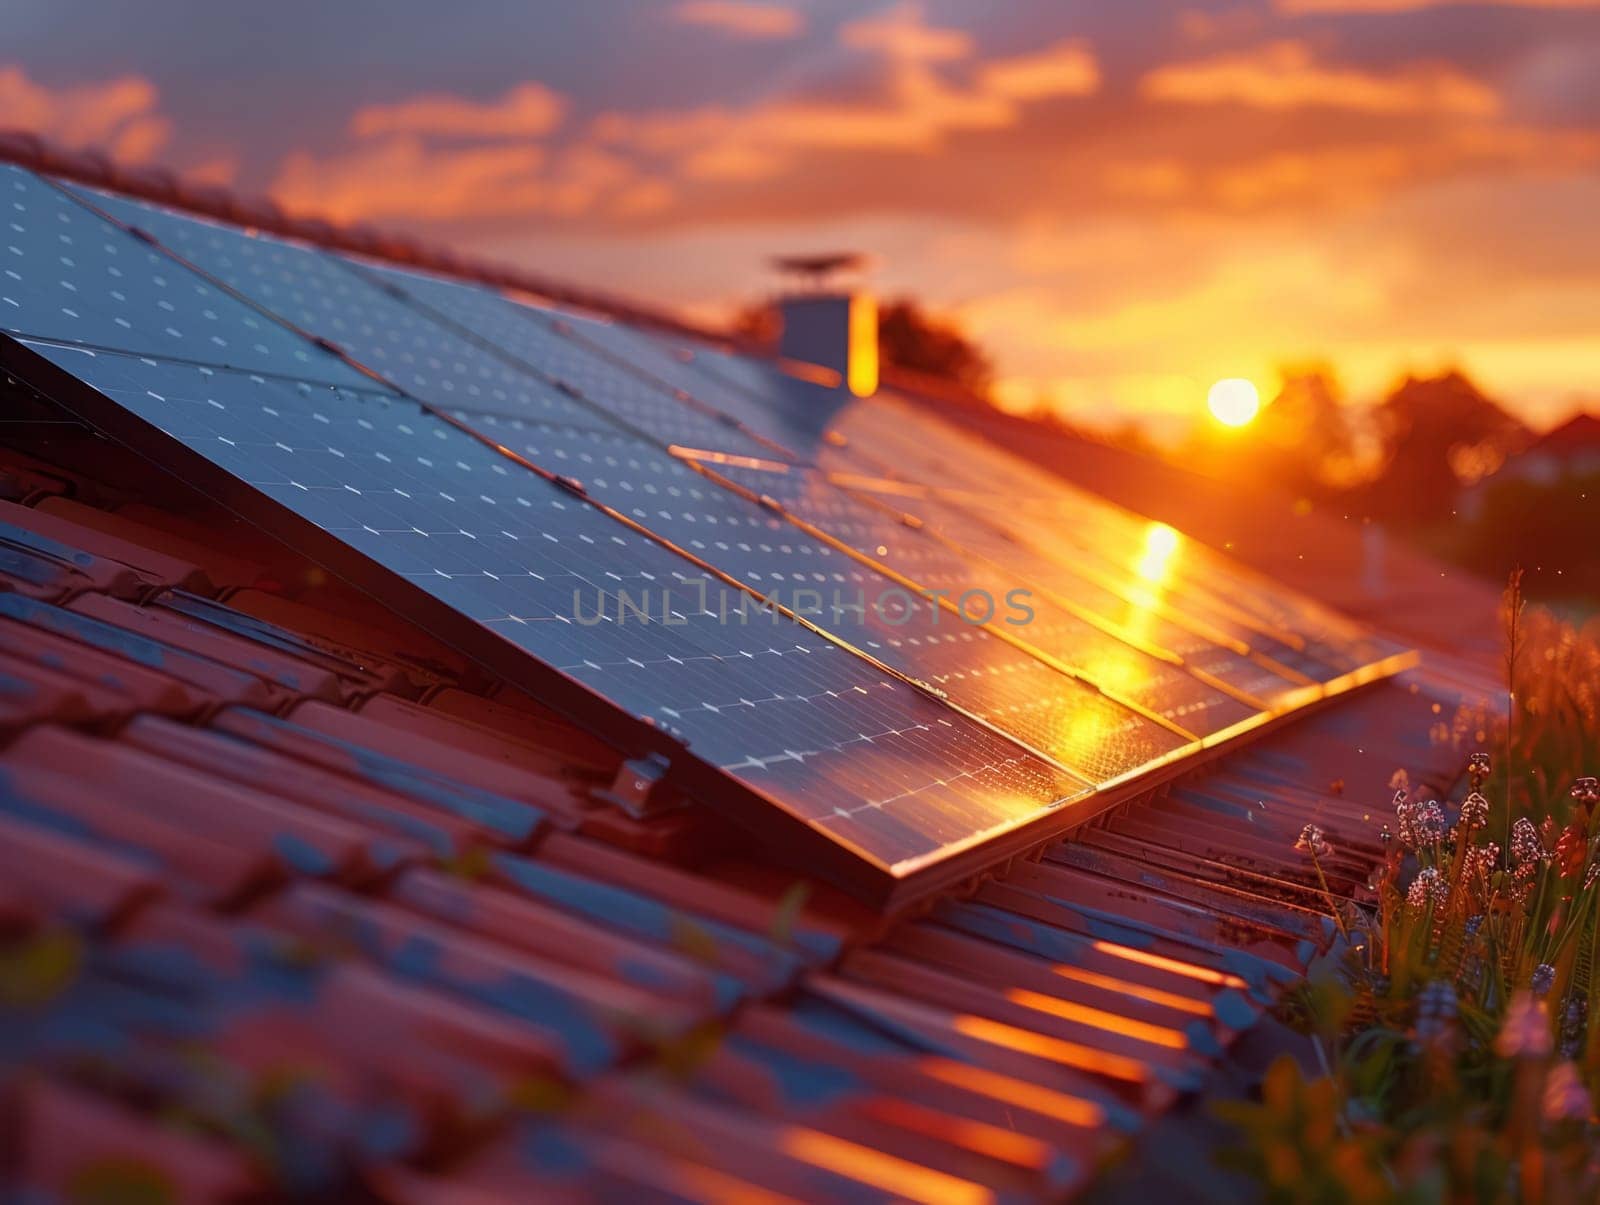 Solar Panels on House Roof at Sunset. Solar Energy Alternative Energy Renewable Concept. Photovoltaic Technology by iliris